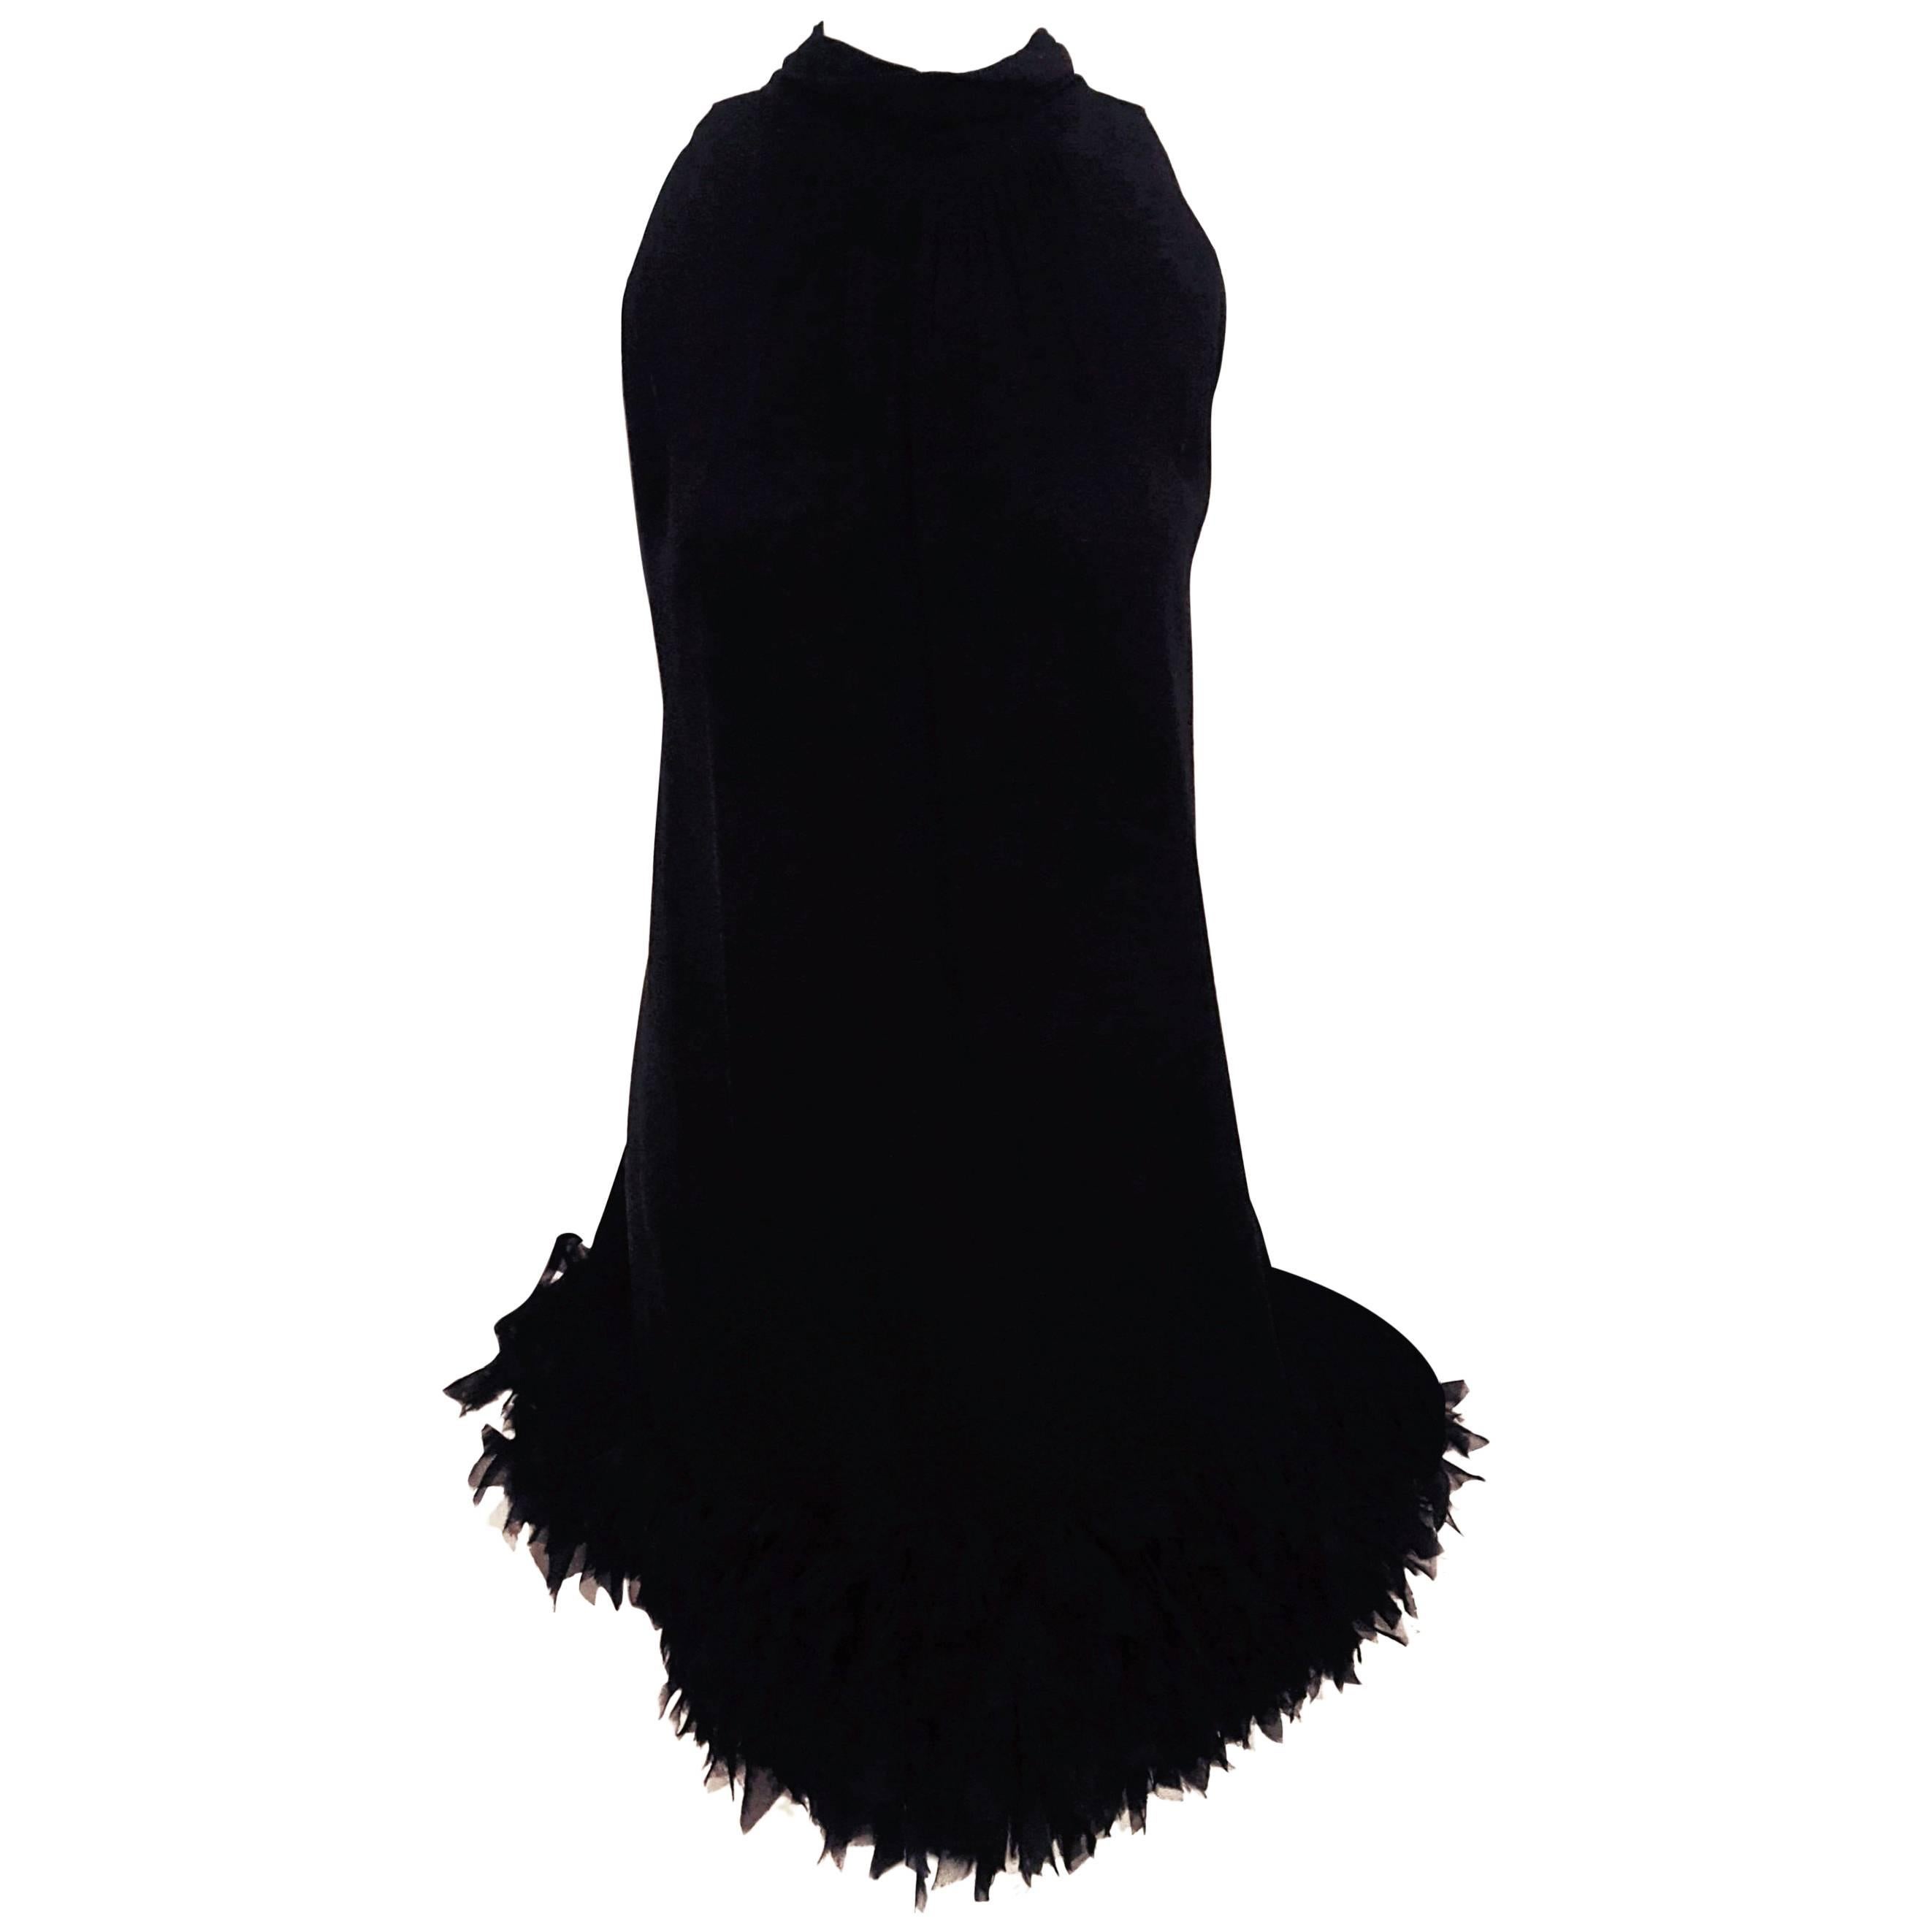 D & G Black Silk Chiffon Sleeveless Dress